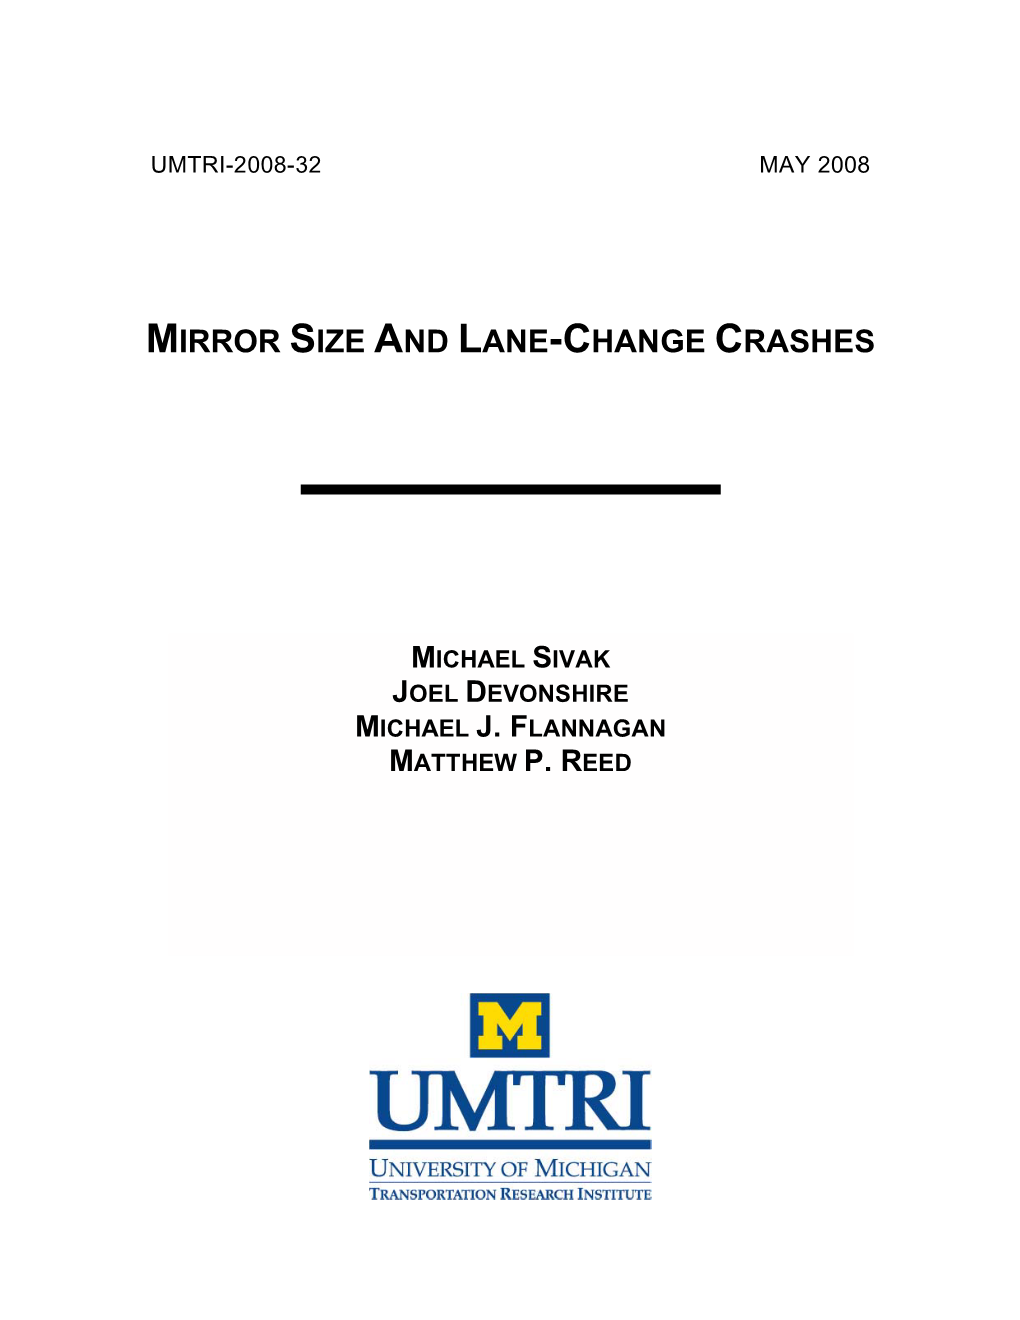 Mirror Size and Lane-Change Crashes